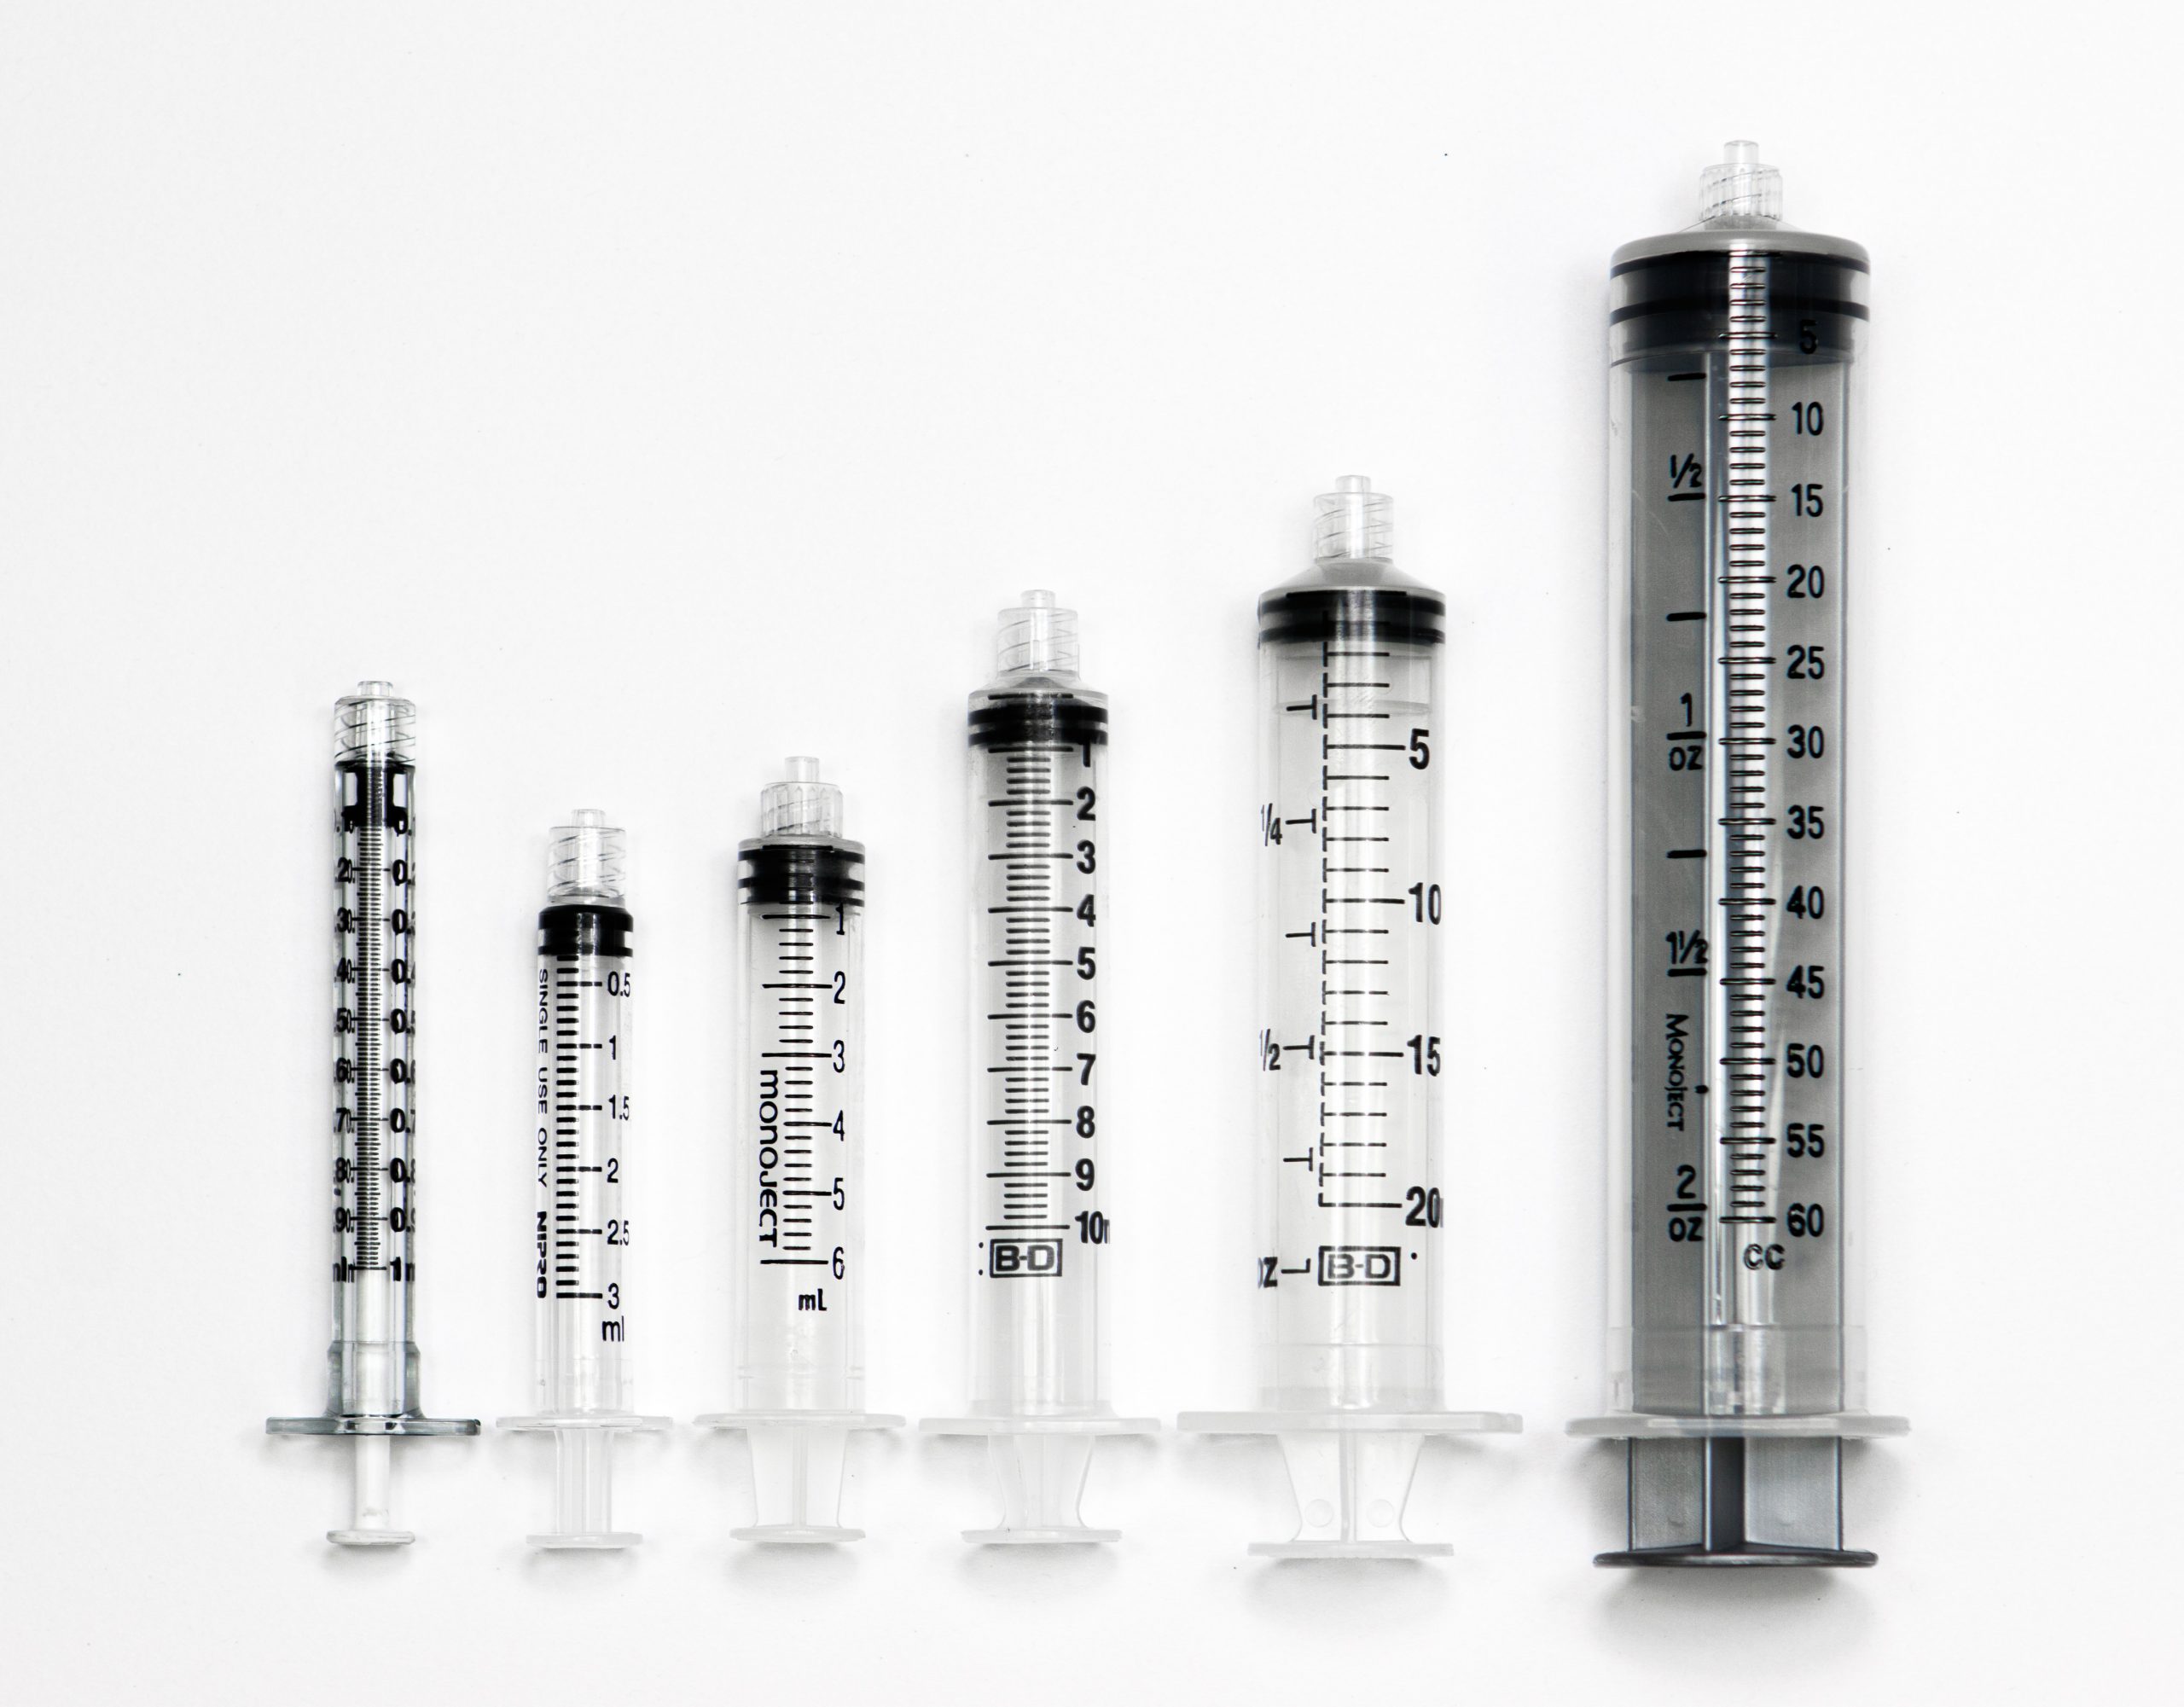 Photo showing six syringes, of various sizes